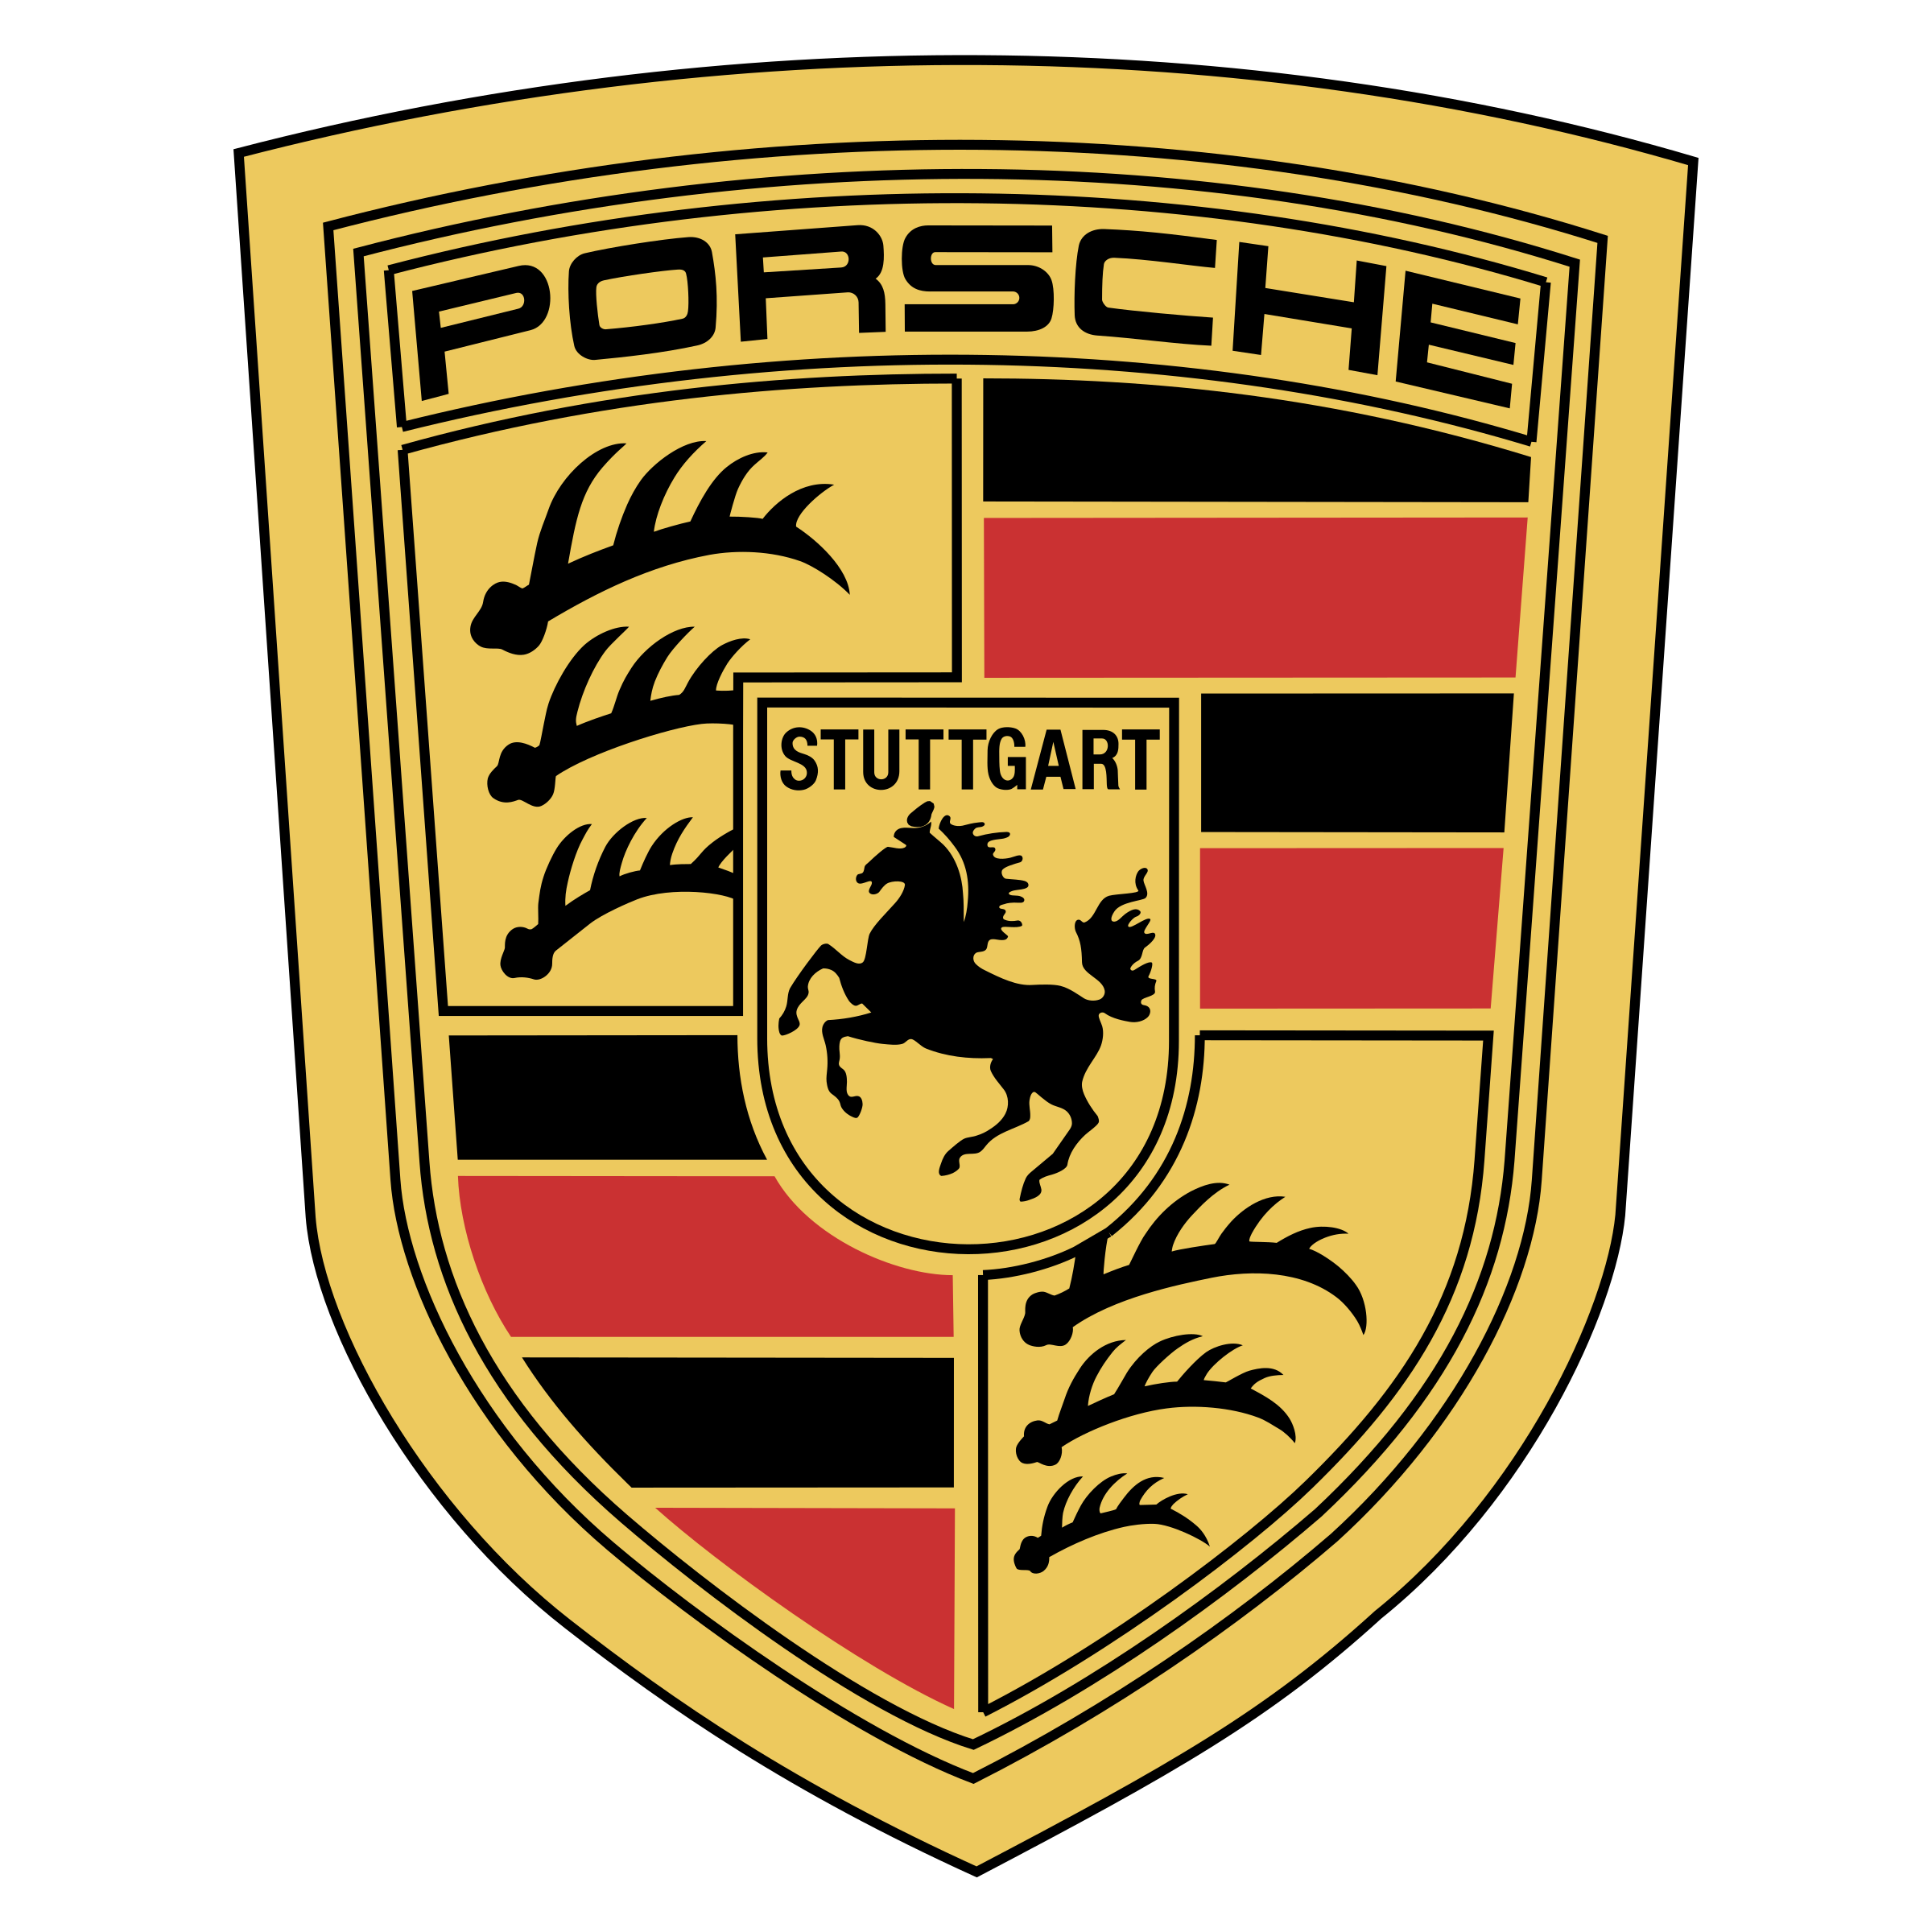 Porsche logo Image Transparente